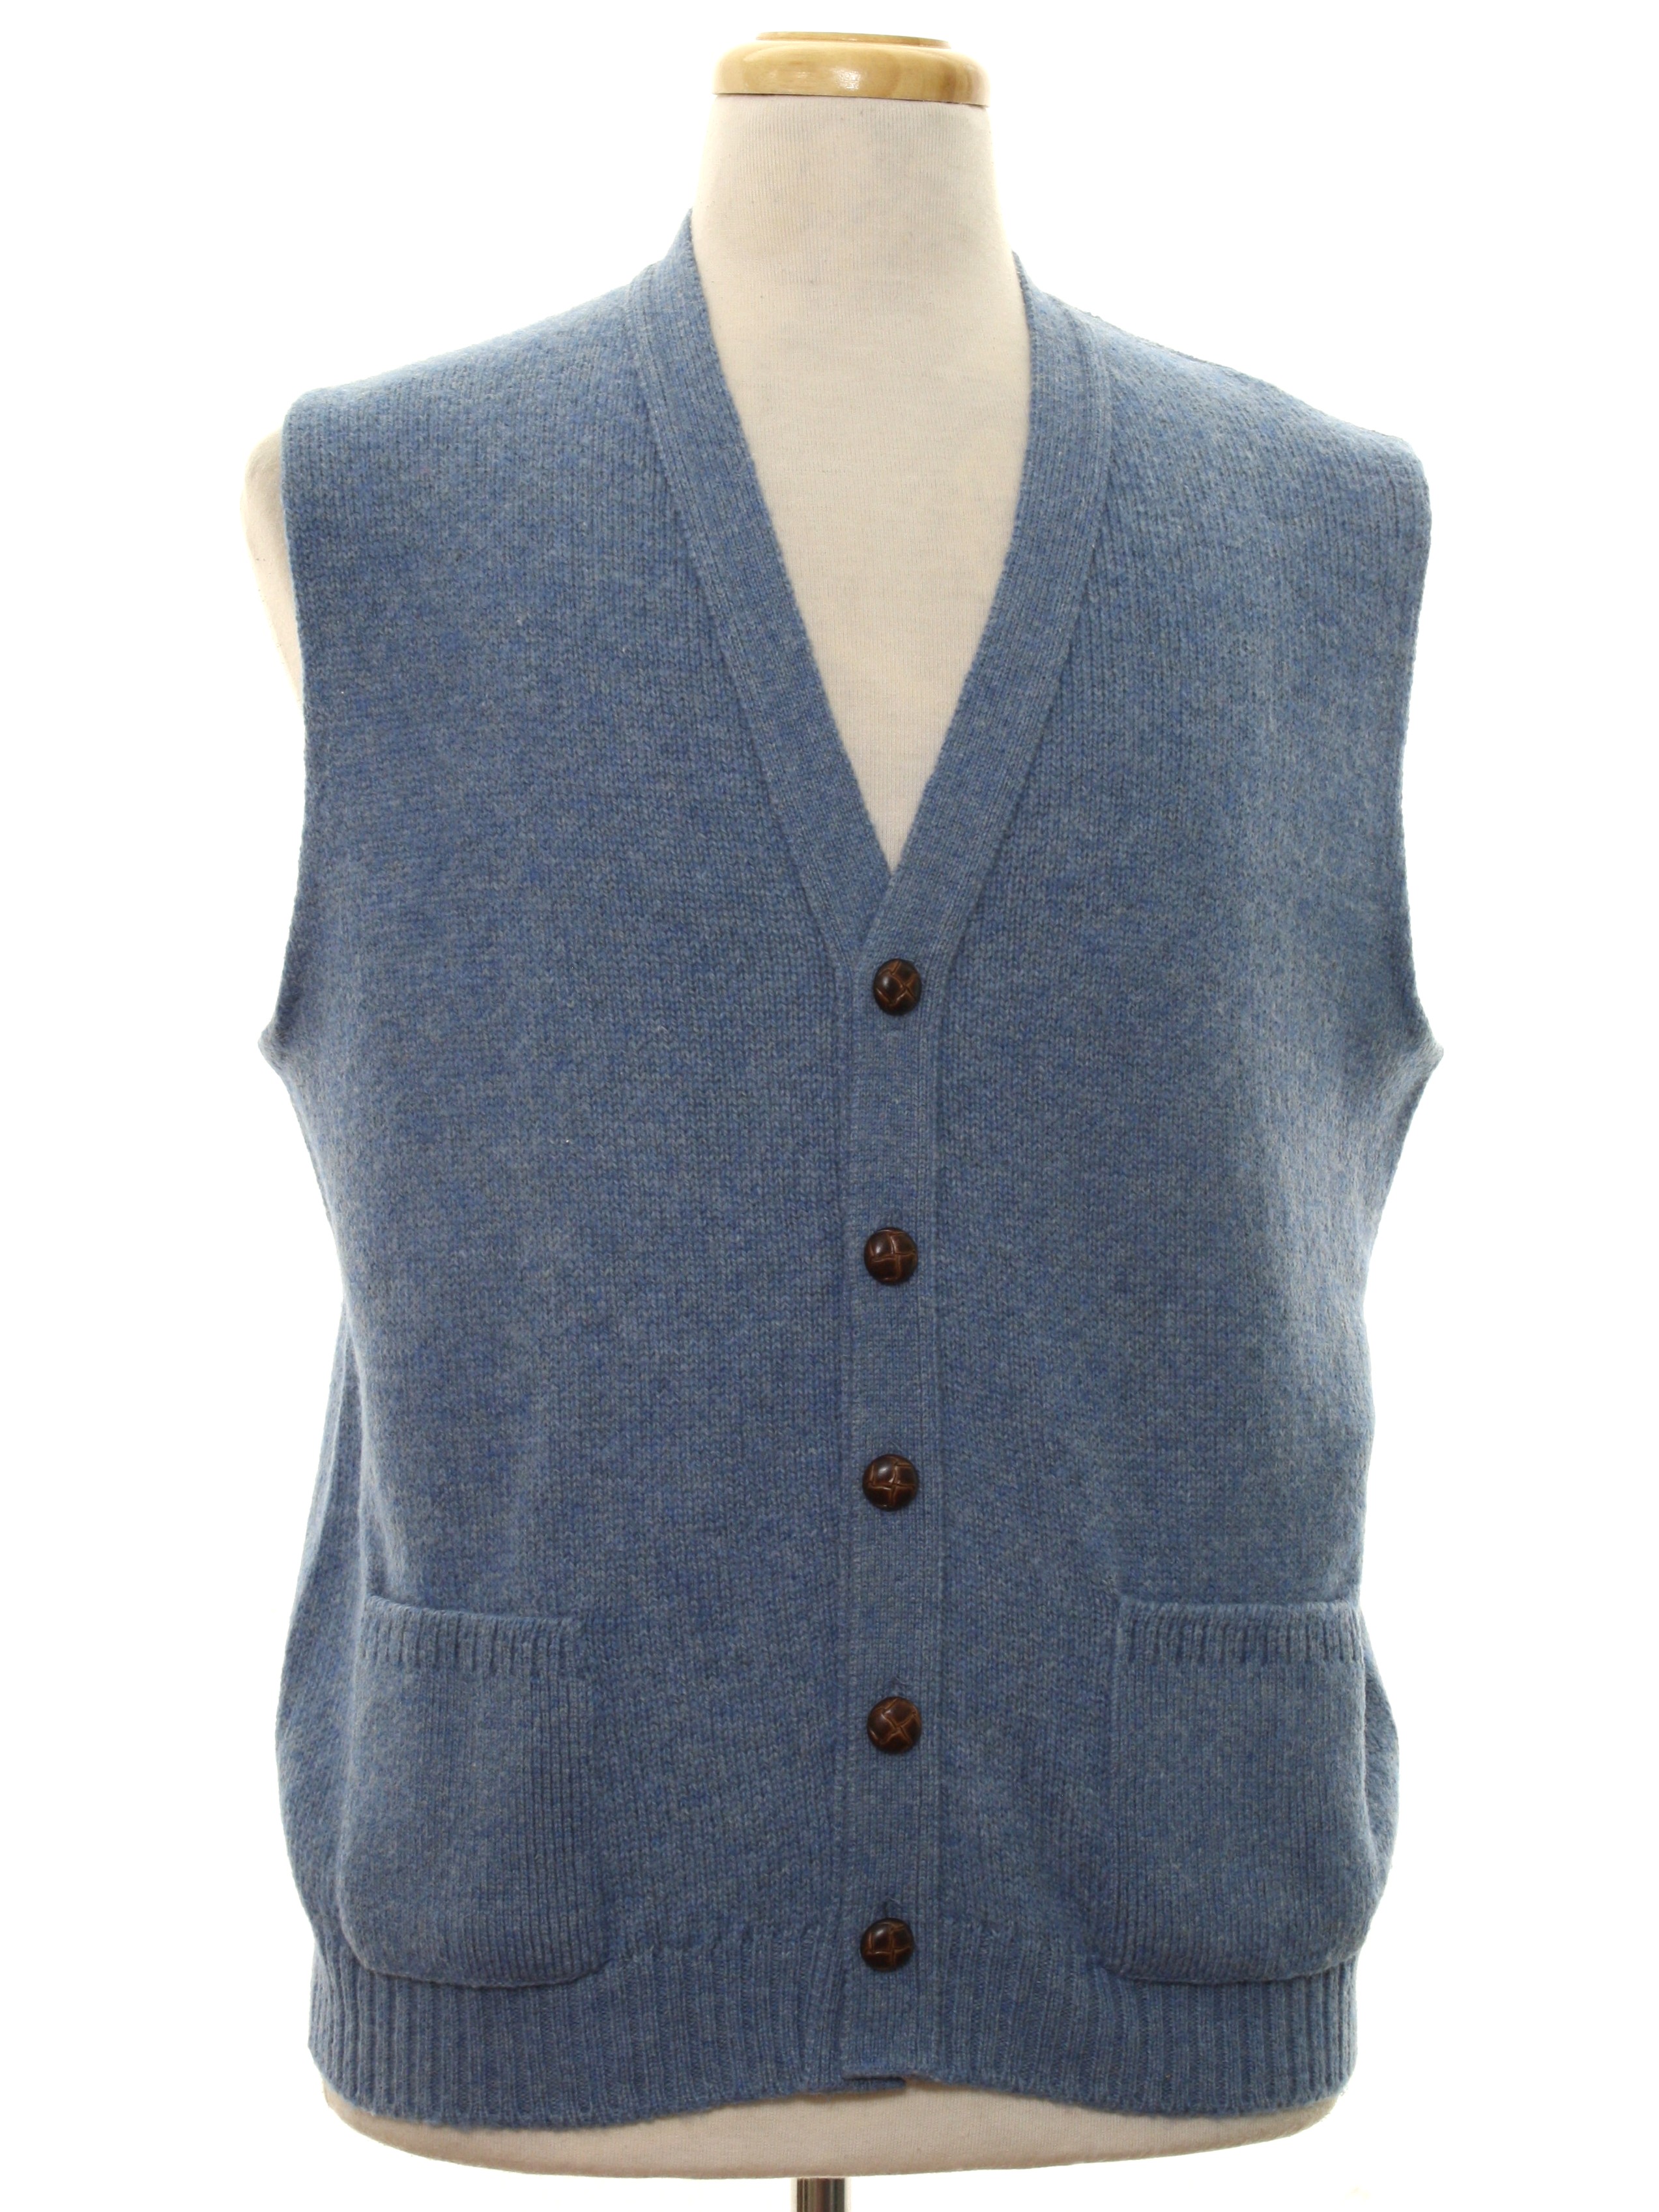 Retro 80s Sweater (Jantzen) : 80s -Jantzen- Mens heathered light blue ...